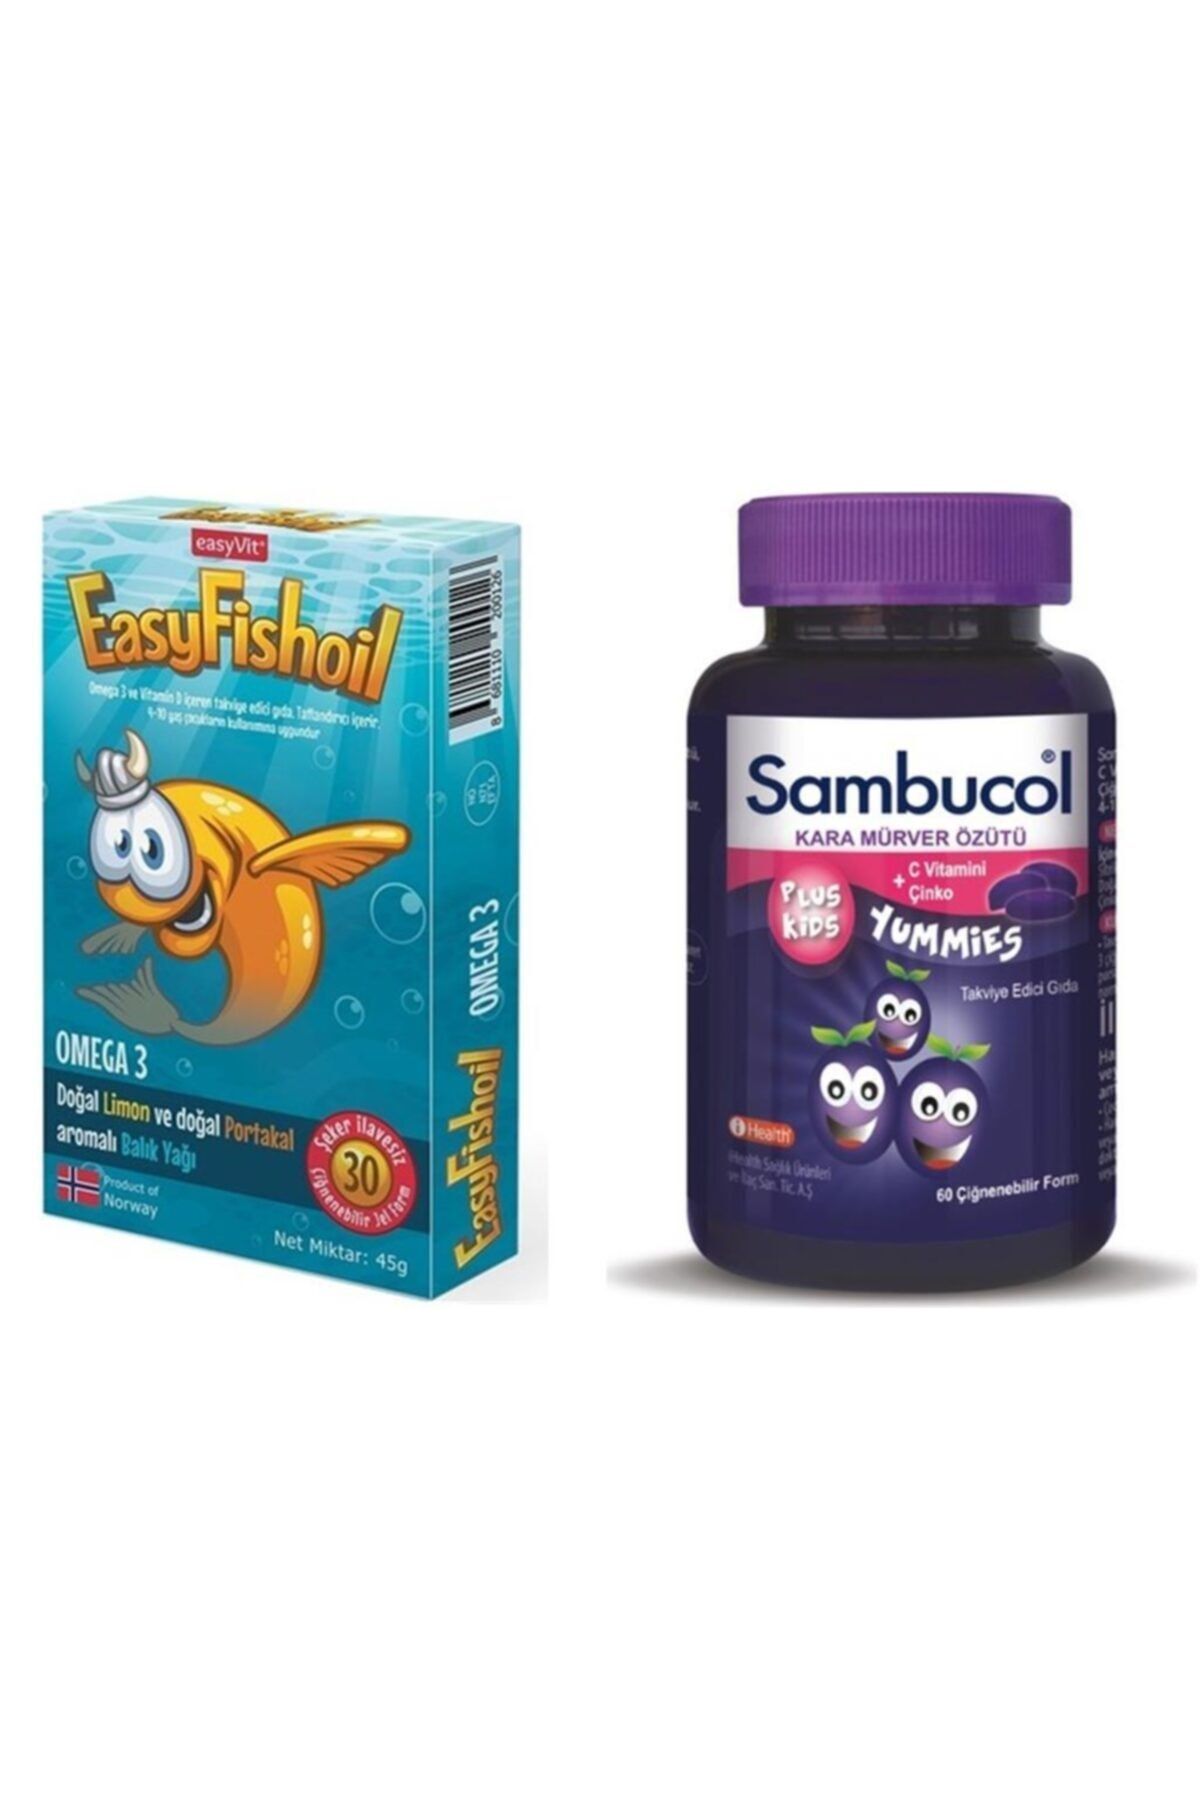 Easy Fishoil Easyfishoil Omega 3 + Sambucol Plus Kids Yummies 60 Tablet